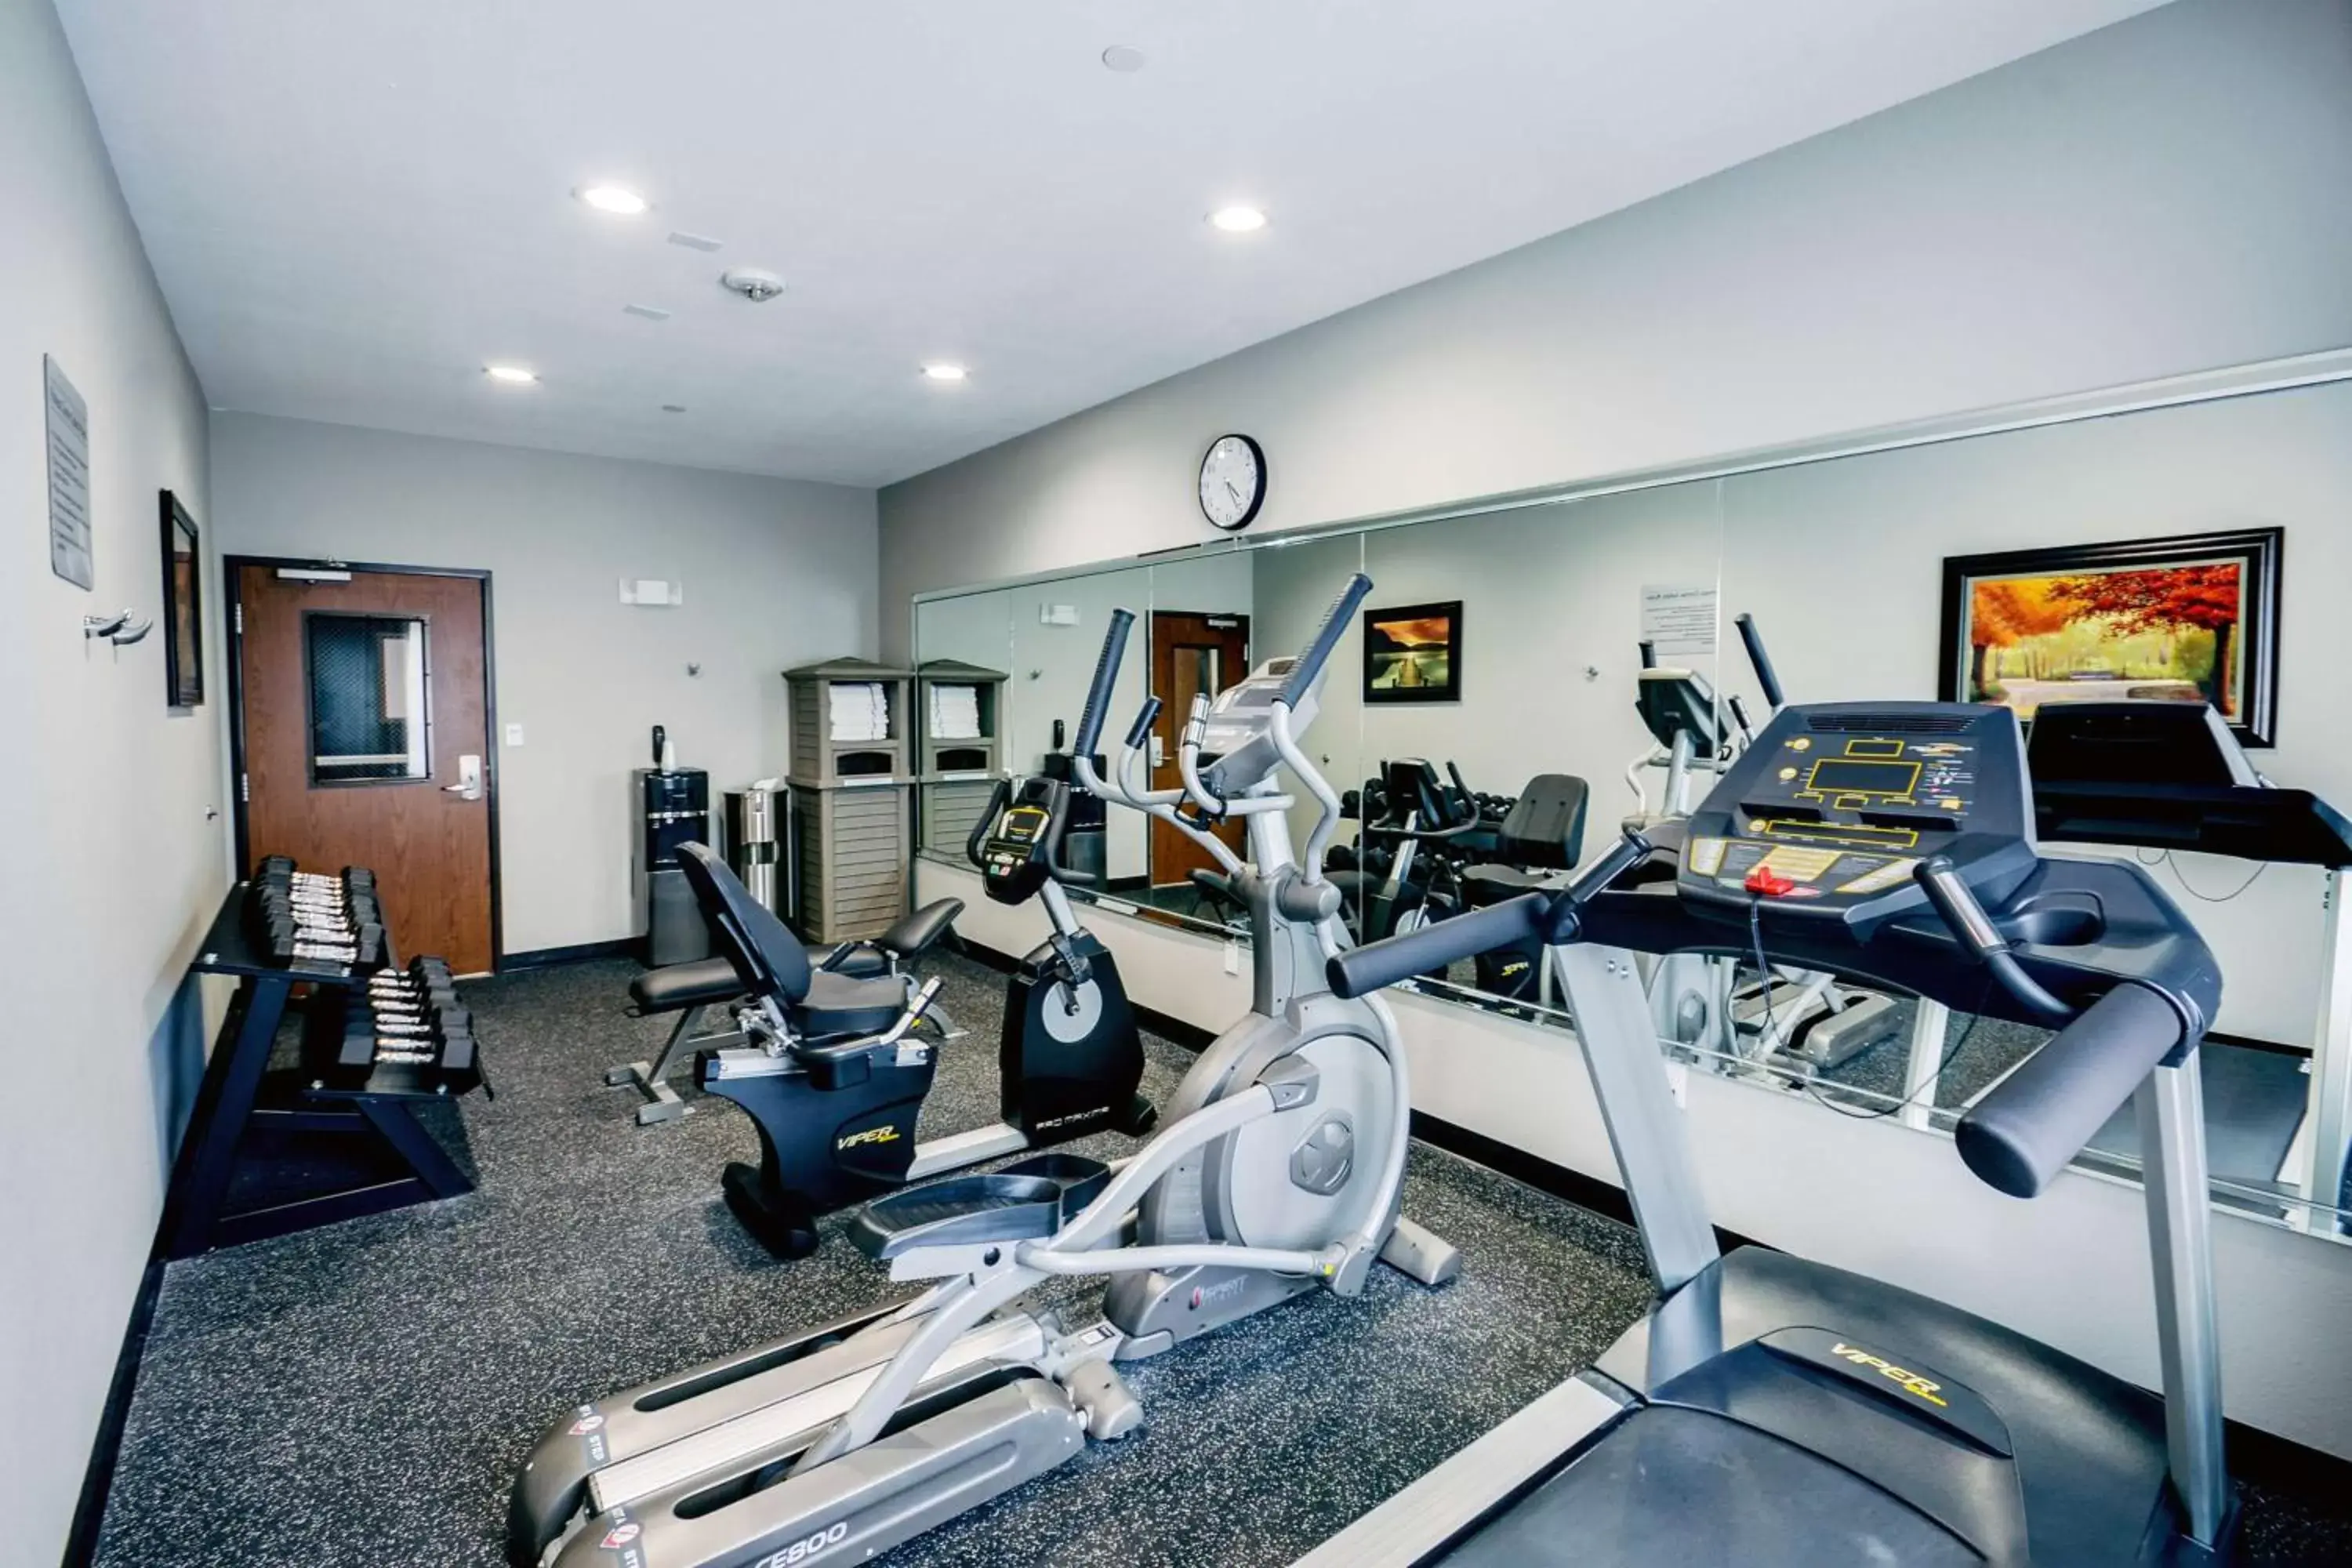 Fitness centre/facilities, Fitness Center/Facilities in Best Western Casino Inn